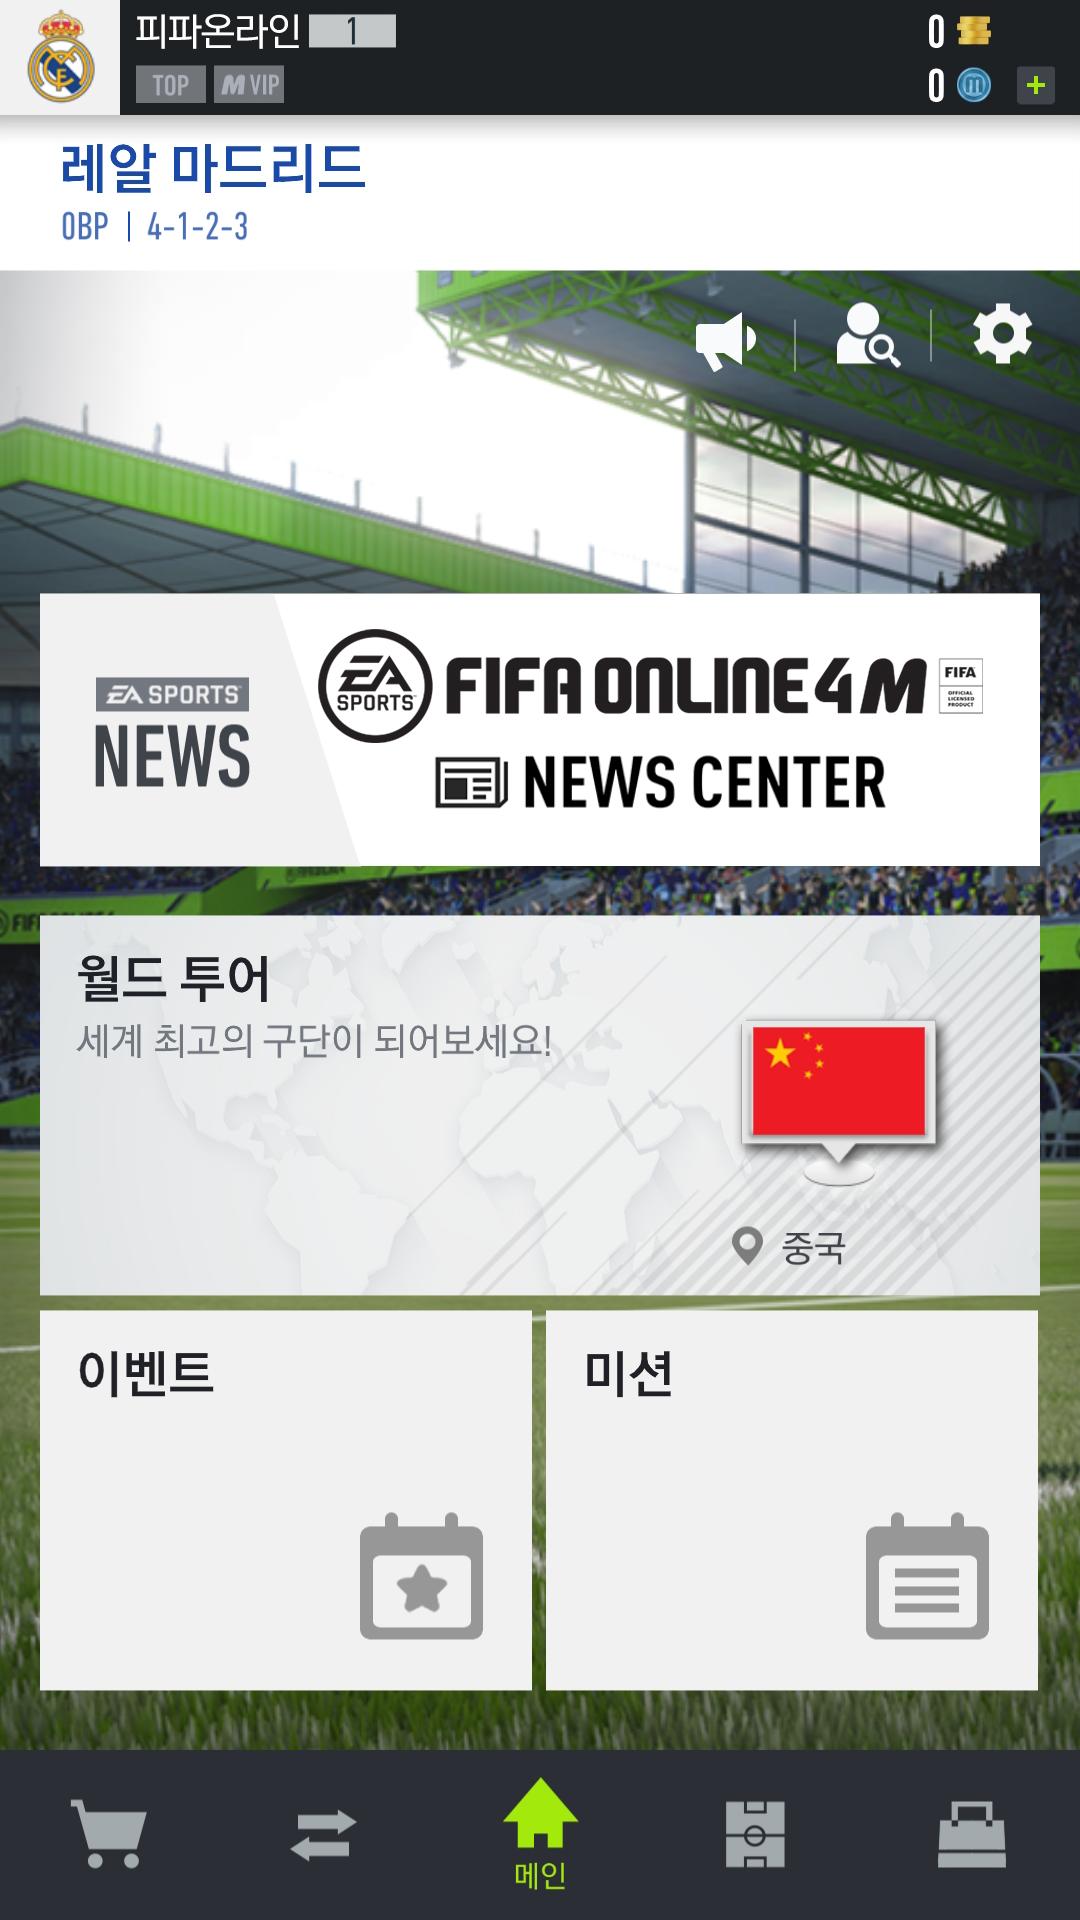 FIFA ONLINE 4 M by EA SPORTS™ 1.0.82 Screenshot 12